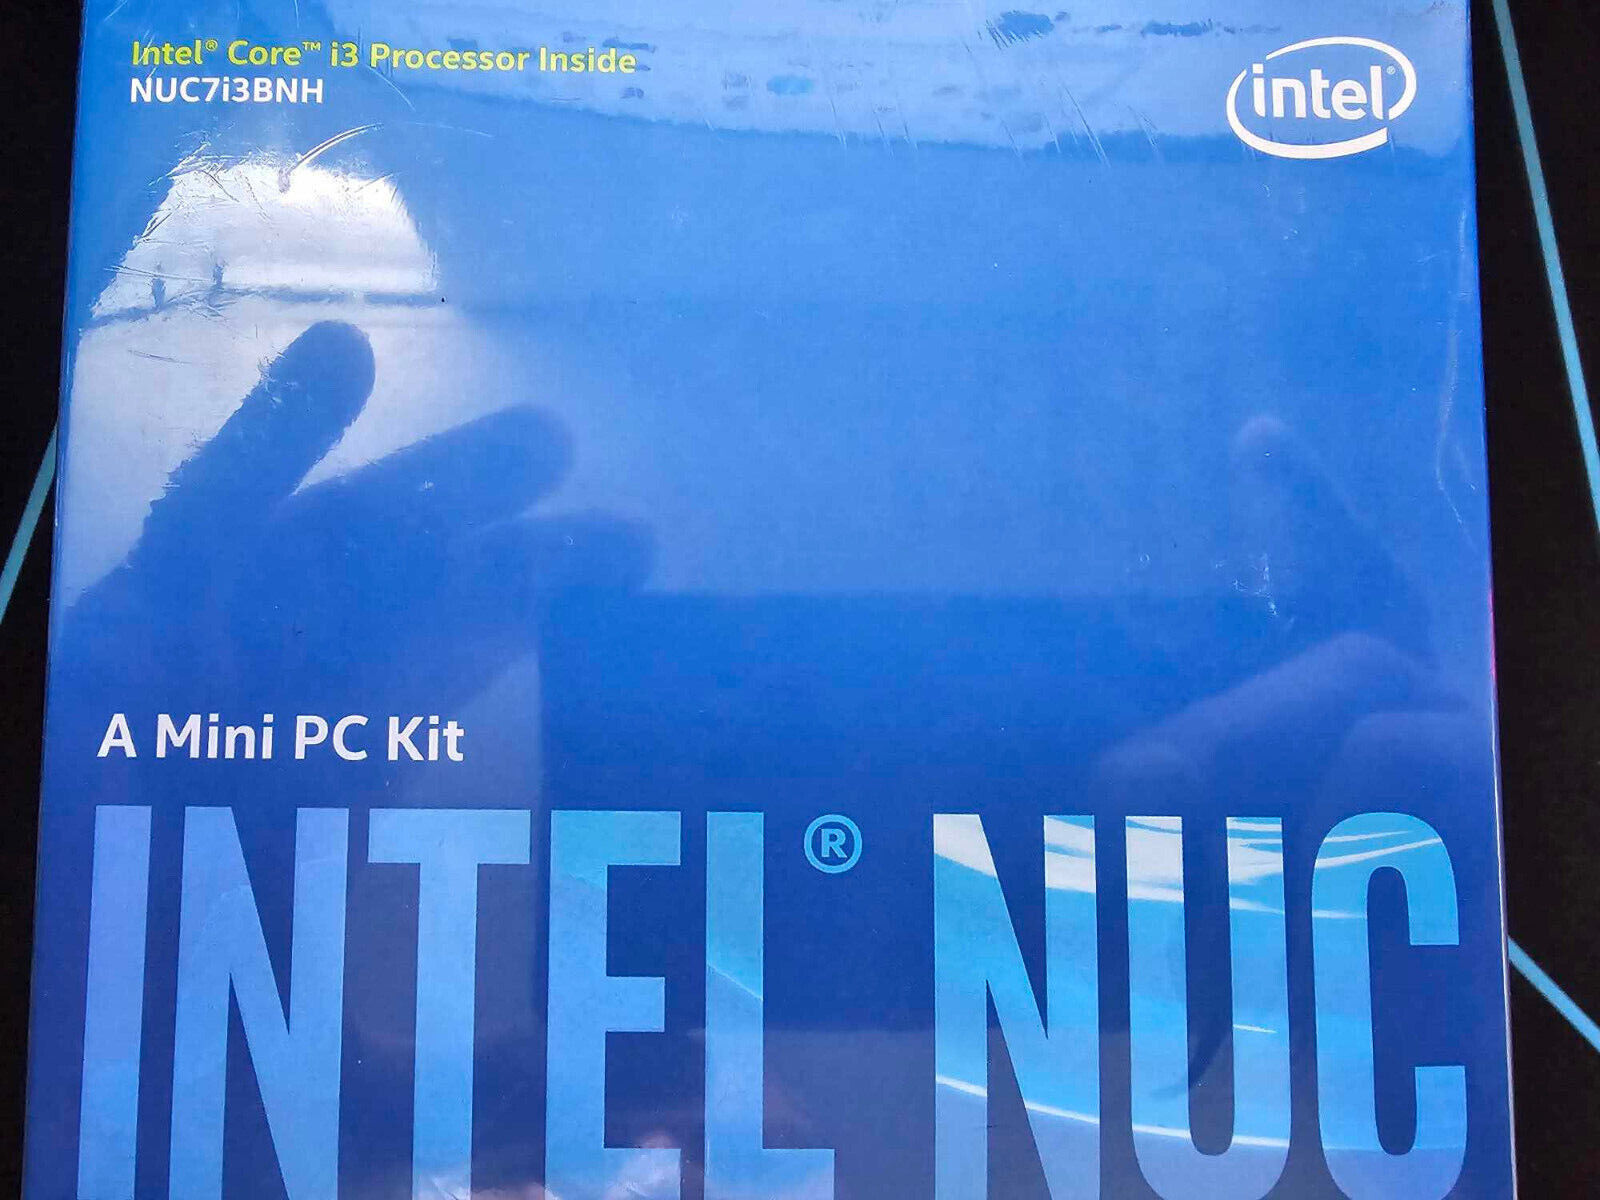 Intel NUC7i3BNH Intel i3-7th Gen Barebone Mini PC - New sealed in factory box